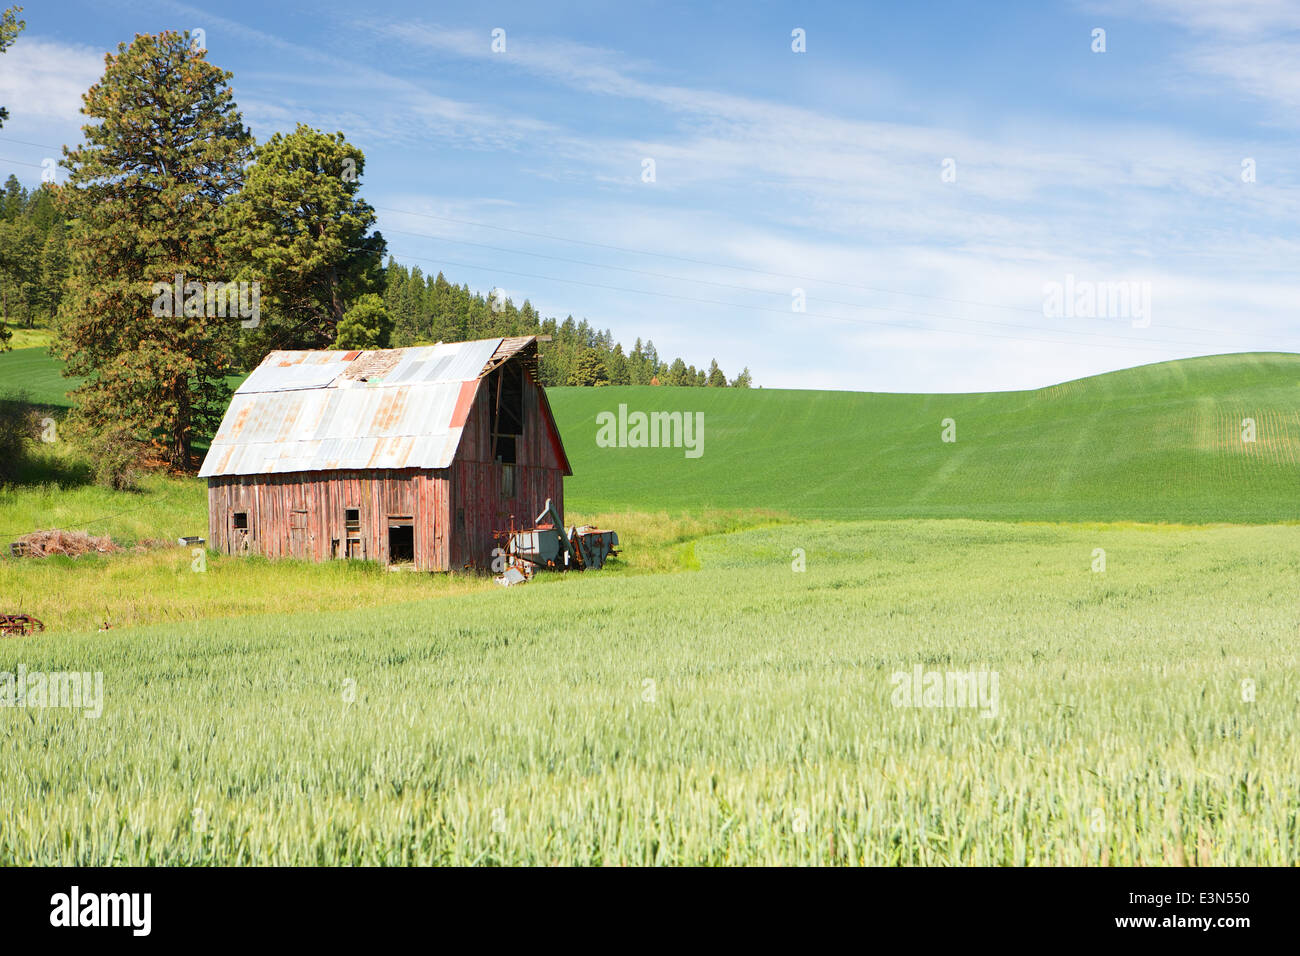 Beautiful country scene of America's heartland, the farming region of the Palouse in Washington State and Idaho. Stock Photo